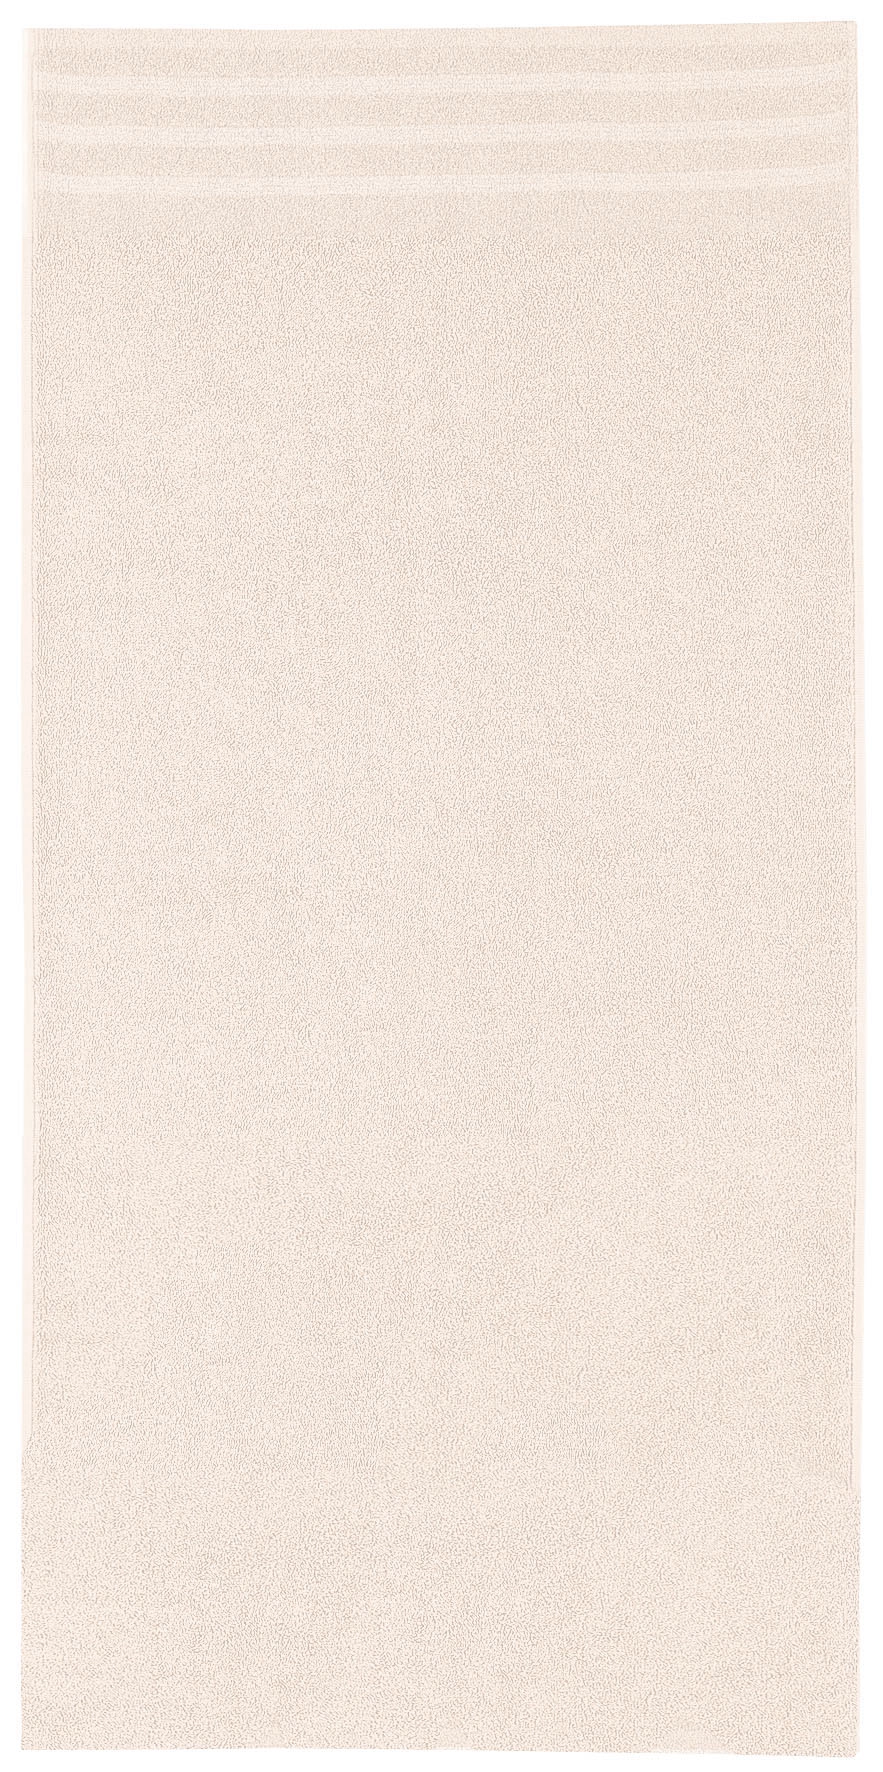 Handtuch, Royal Sandbeige, 50x100 cm